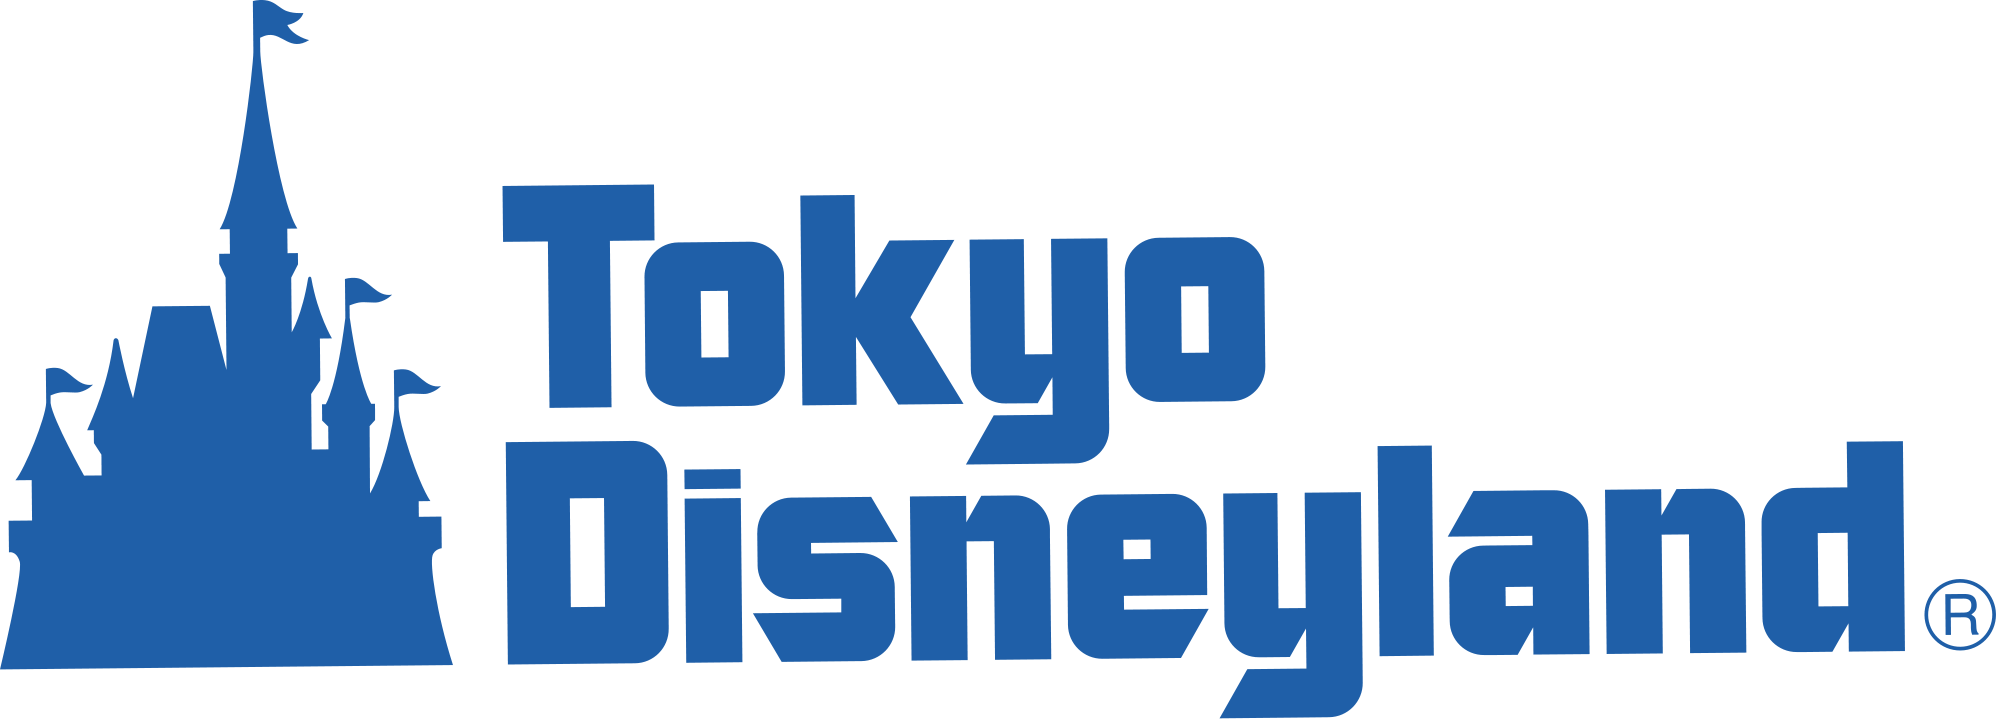 Tokyo Disneyland Logo - Tokyo Disneyland